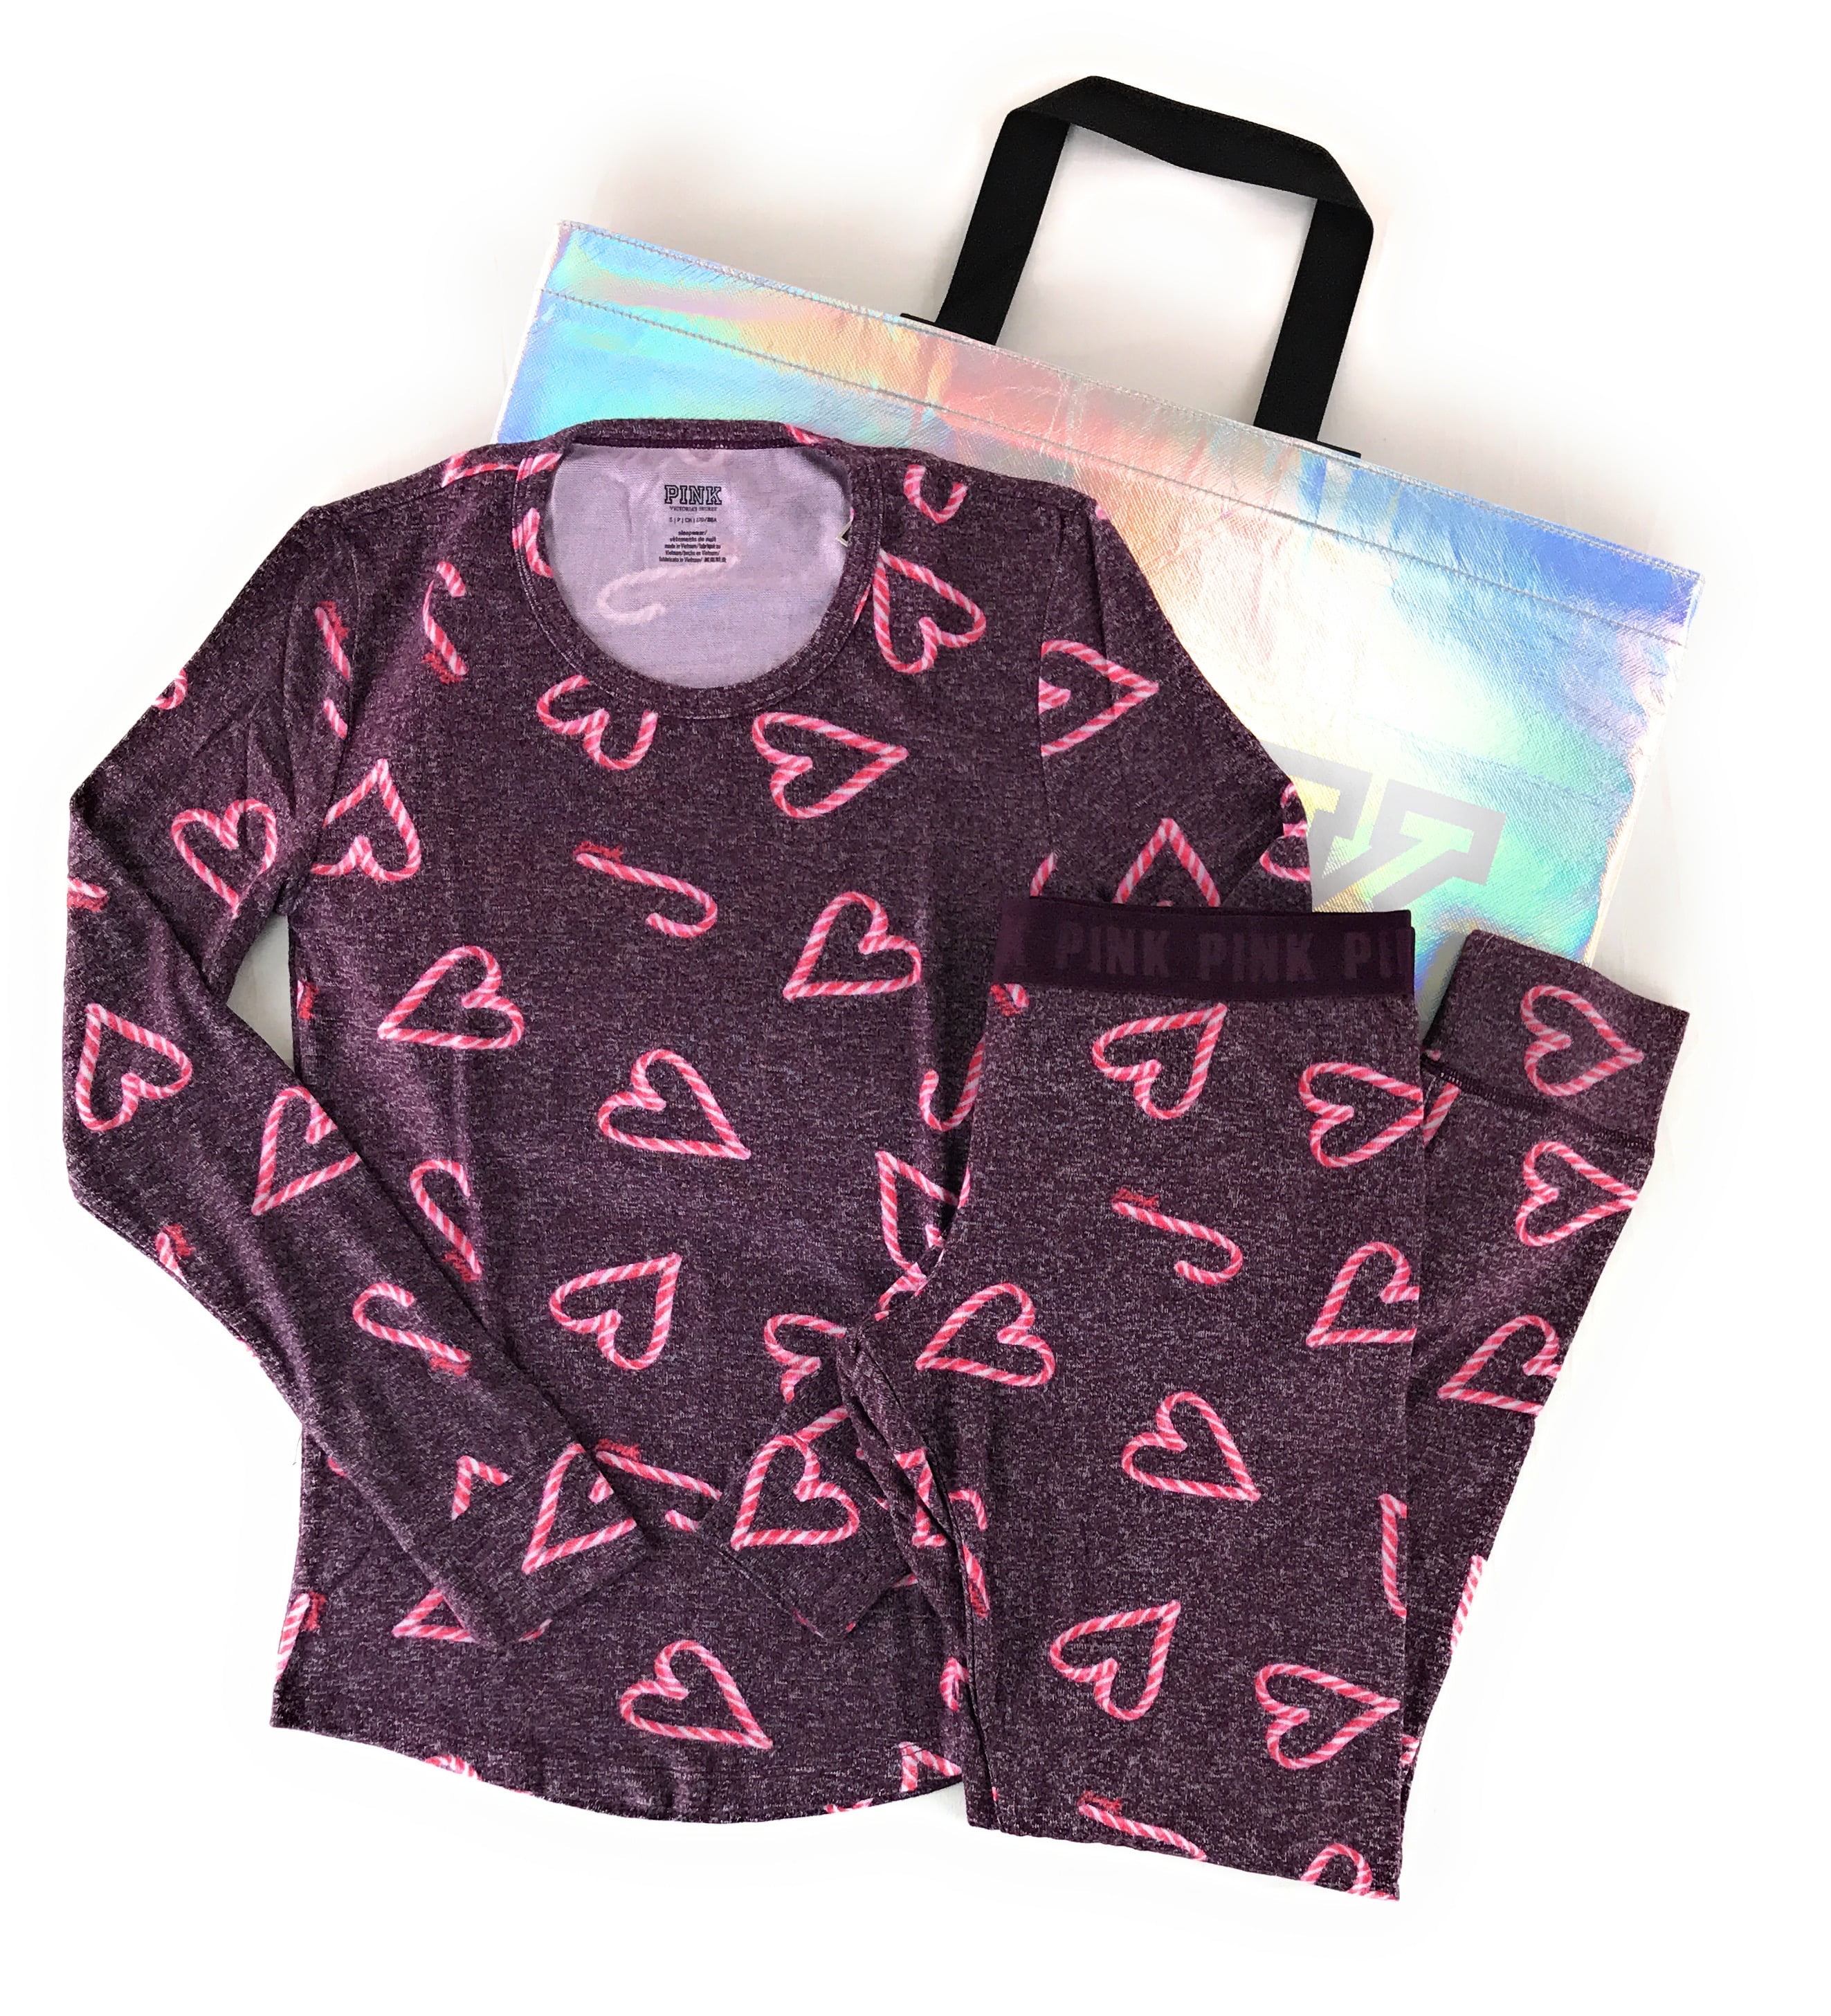 Pink Striped Victorias Secret Shopping Bag Stock Photo - Download